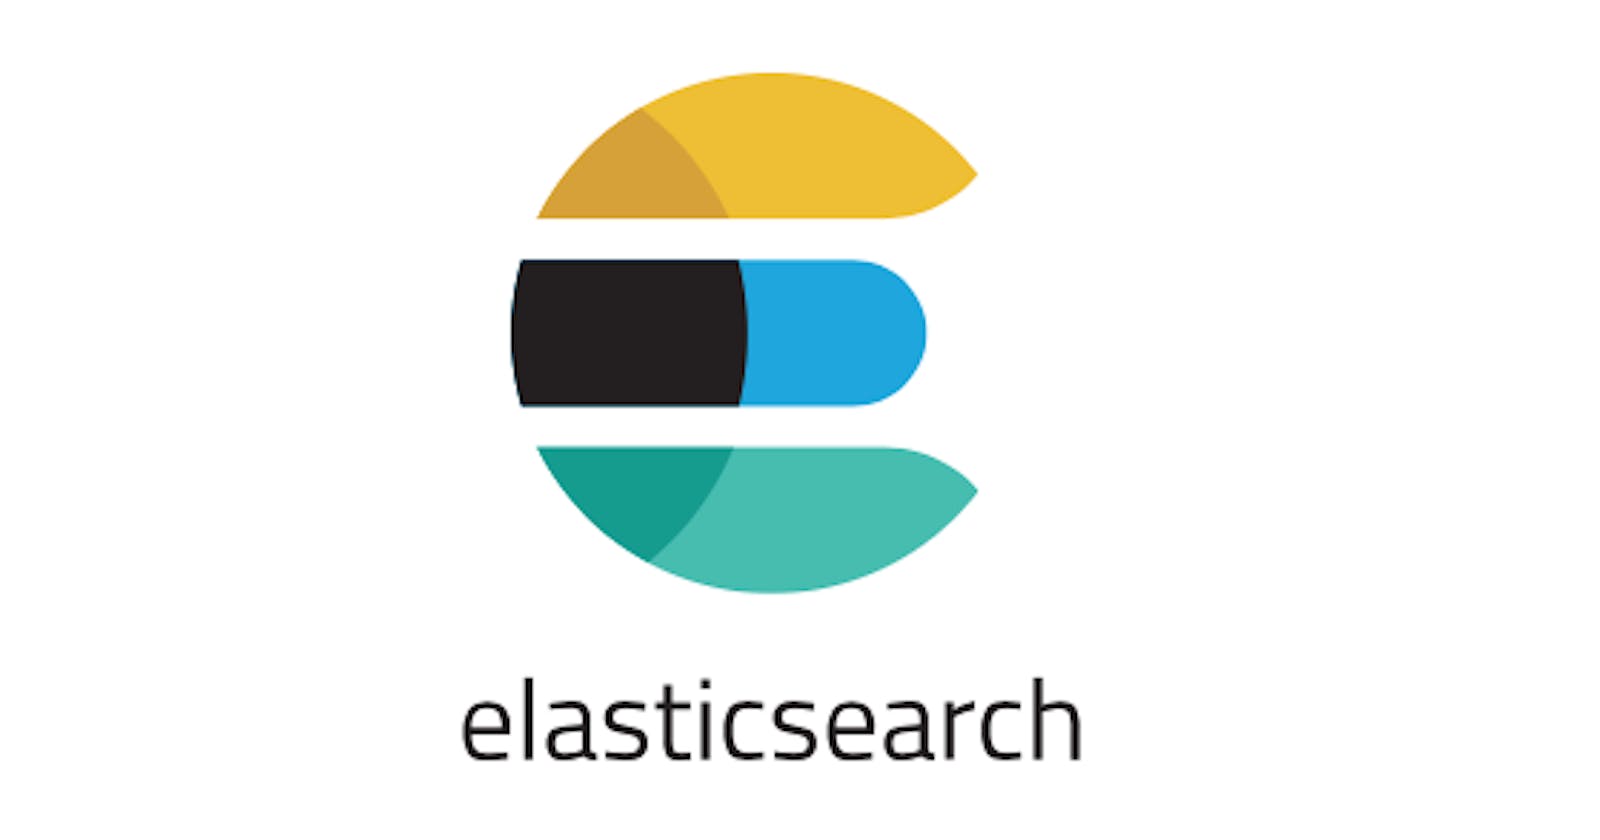 Amazon Elasticsearch: An Introduction